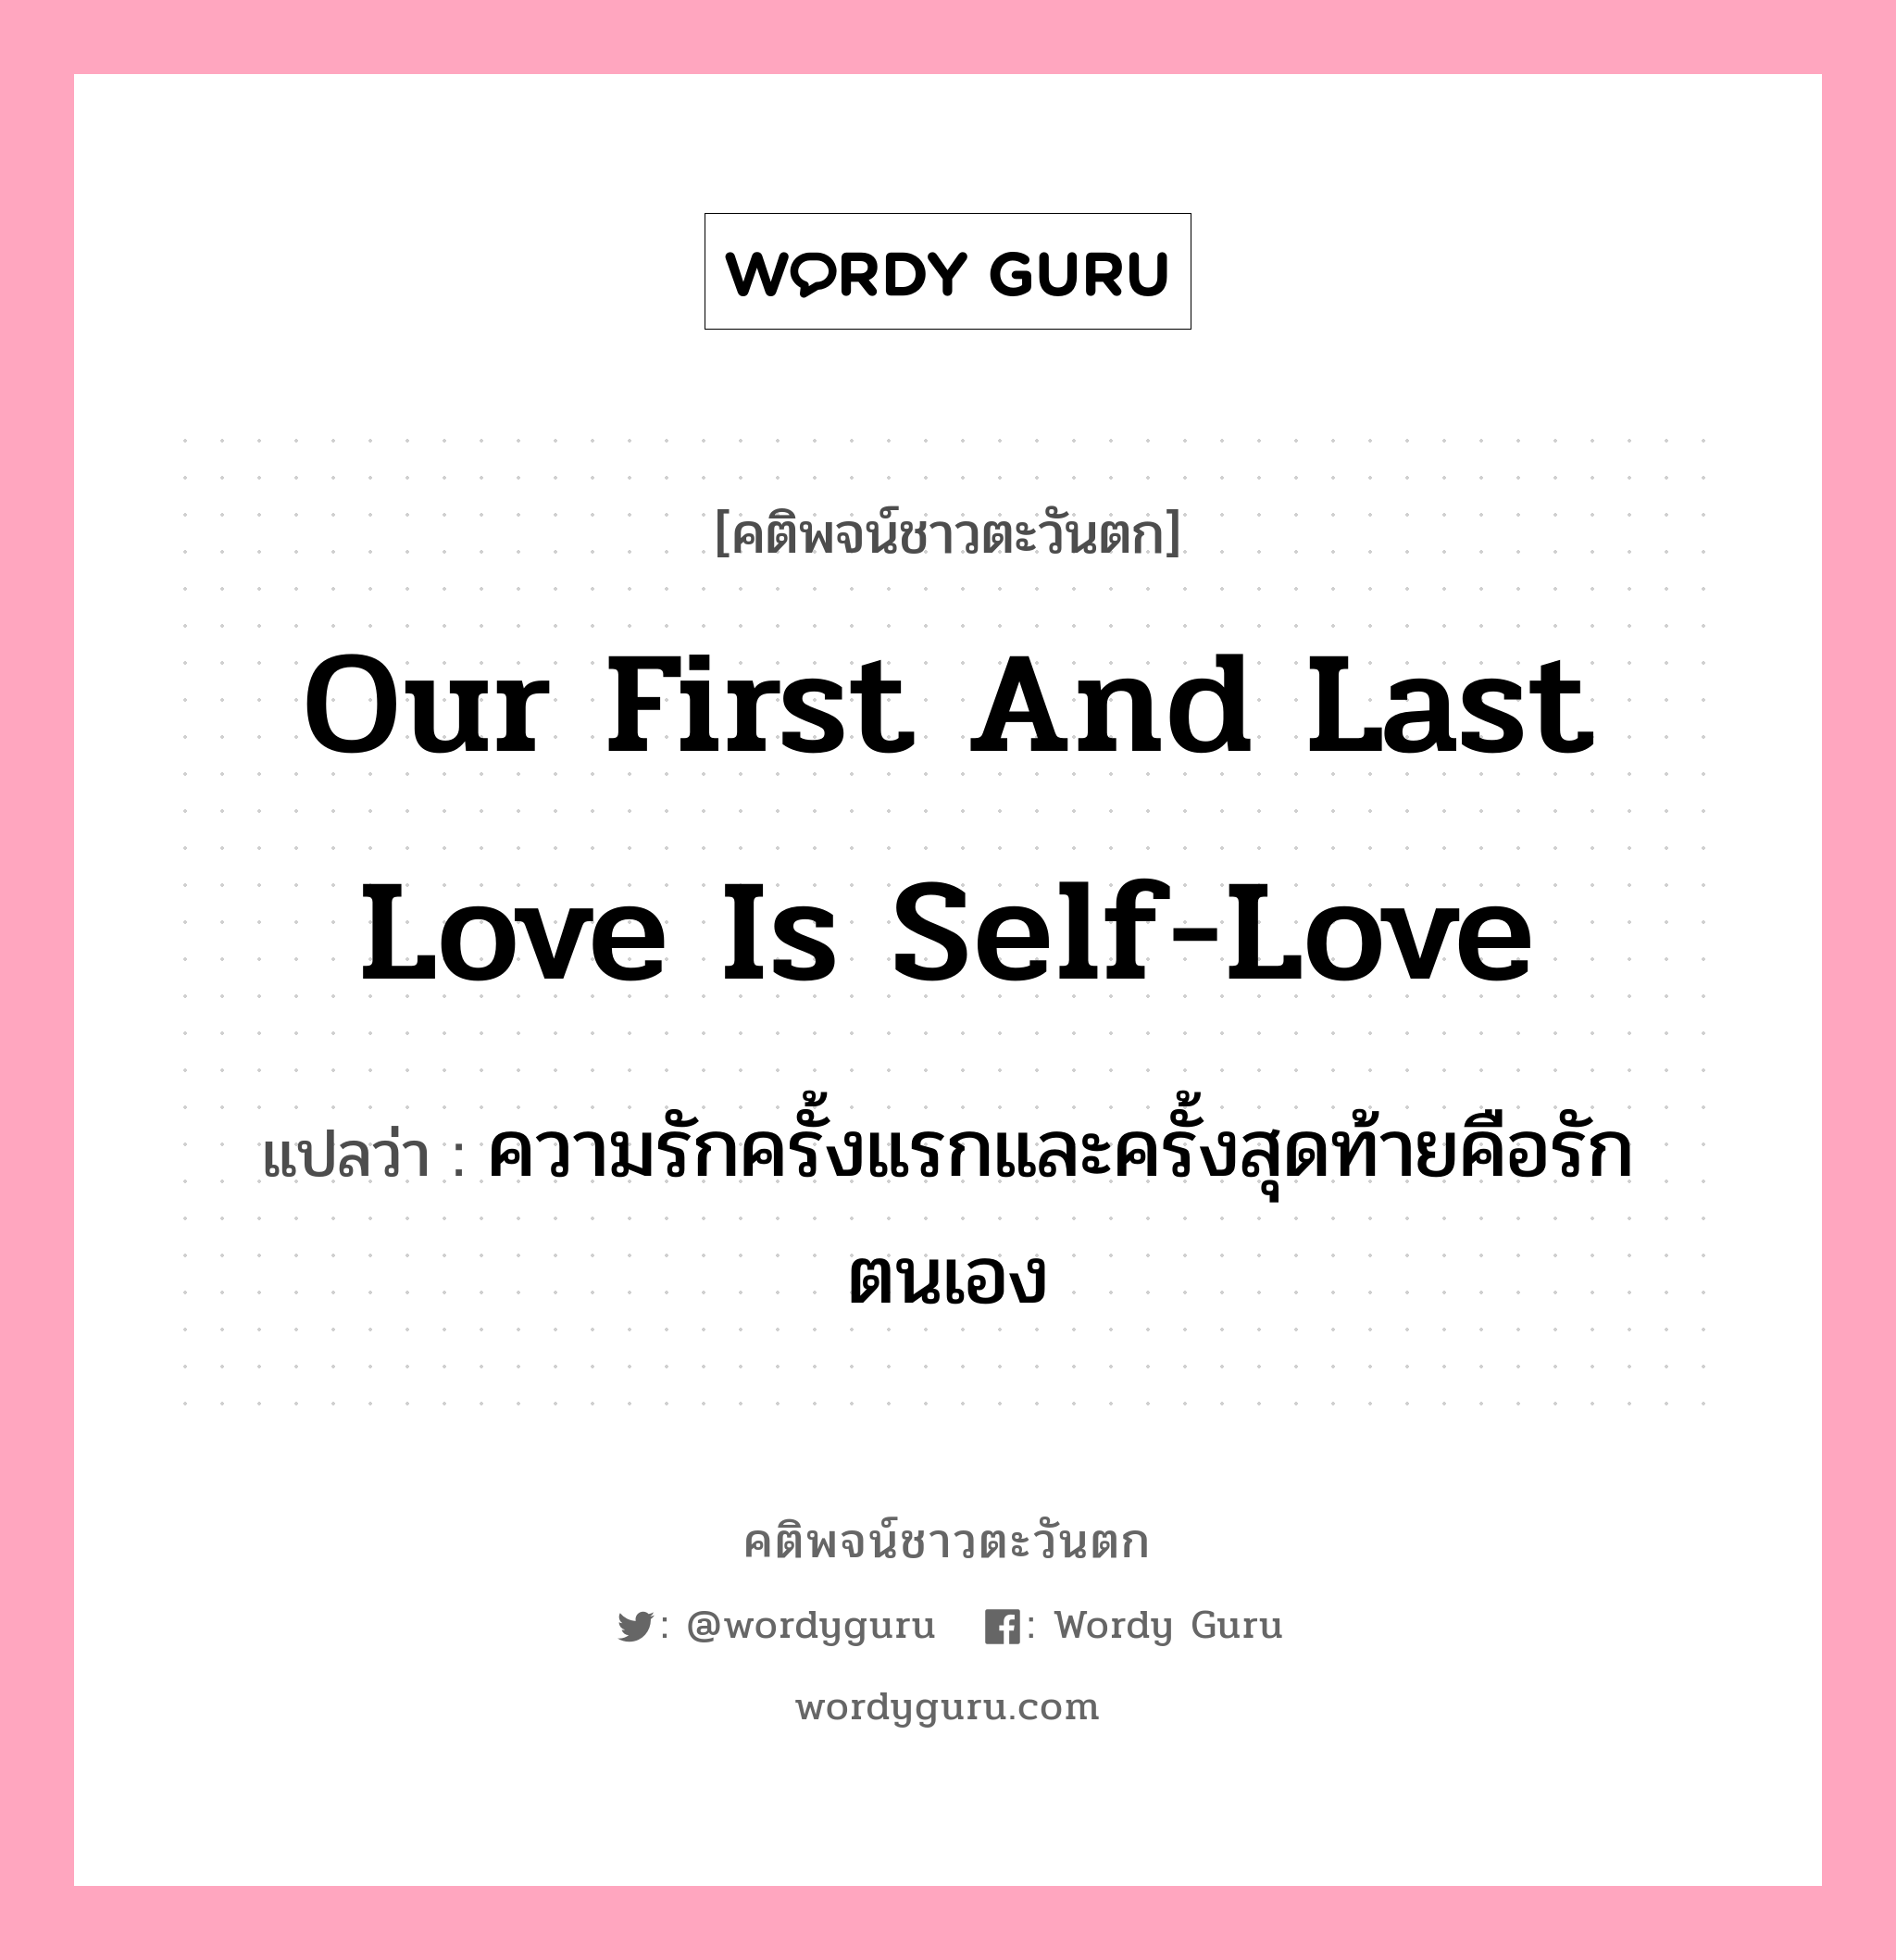 Our first and last love is self-love, คติพจน์ชาวตะวันตก Our first and last love is self-love แปลว่า ความรักครั้งแรกและครั้งสุดท้ายคือรักตนเอง